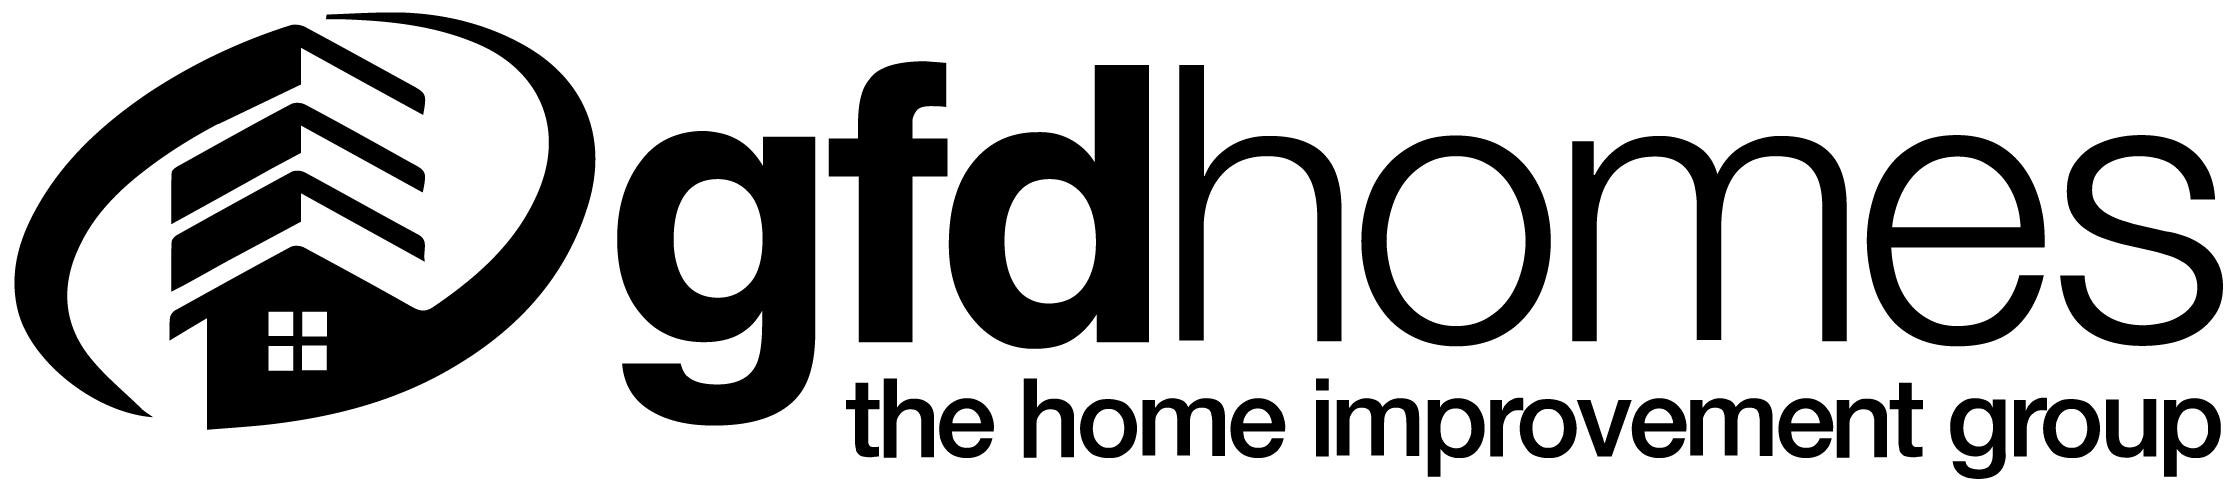 GFD Homes